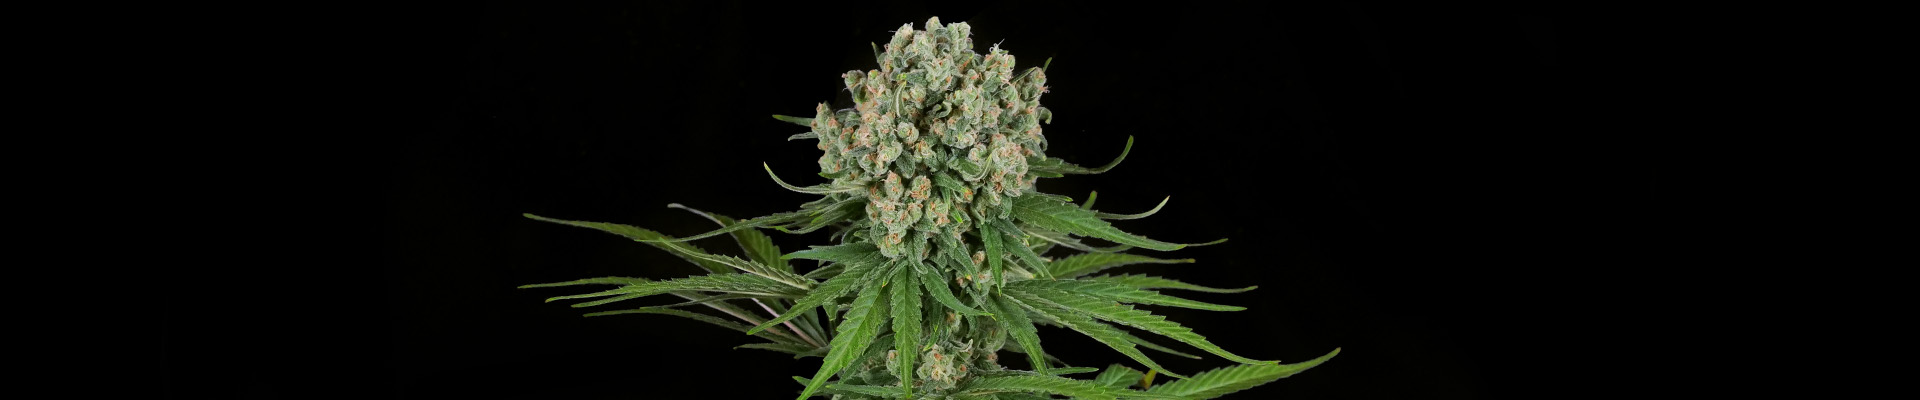 Mandarin Punch Feminized Cannabis Plant tegen de zwarte achtergrond